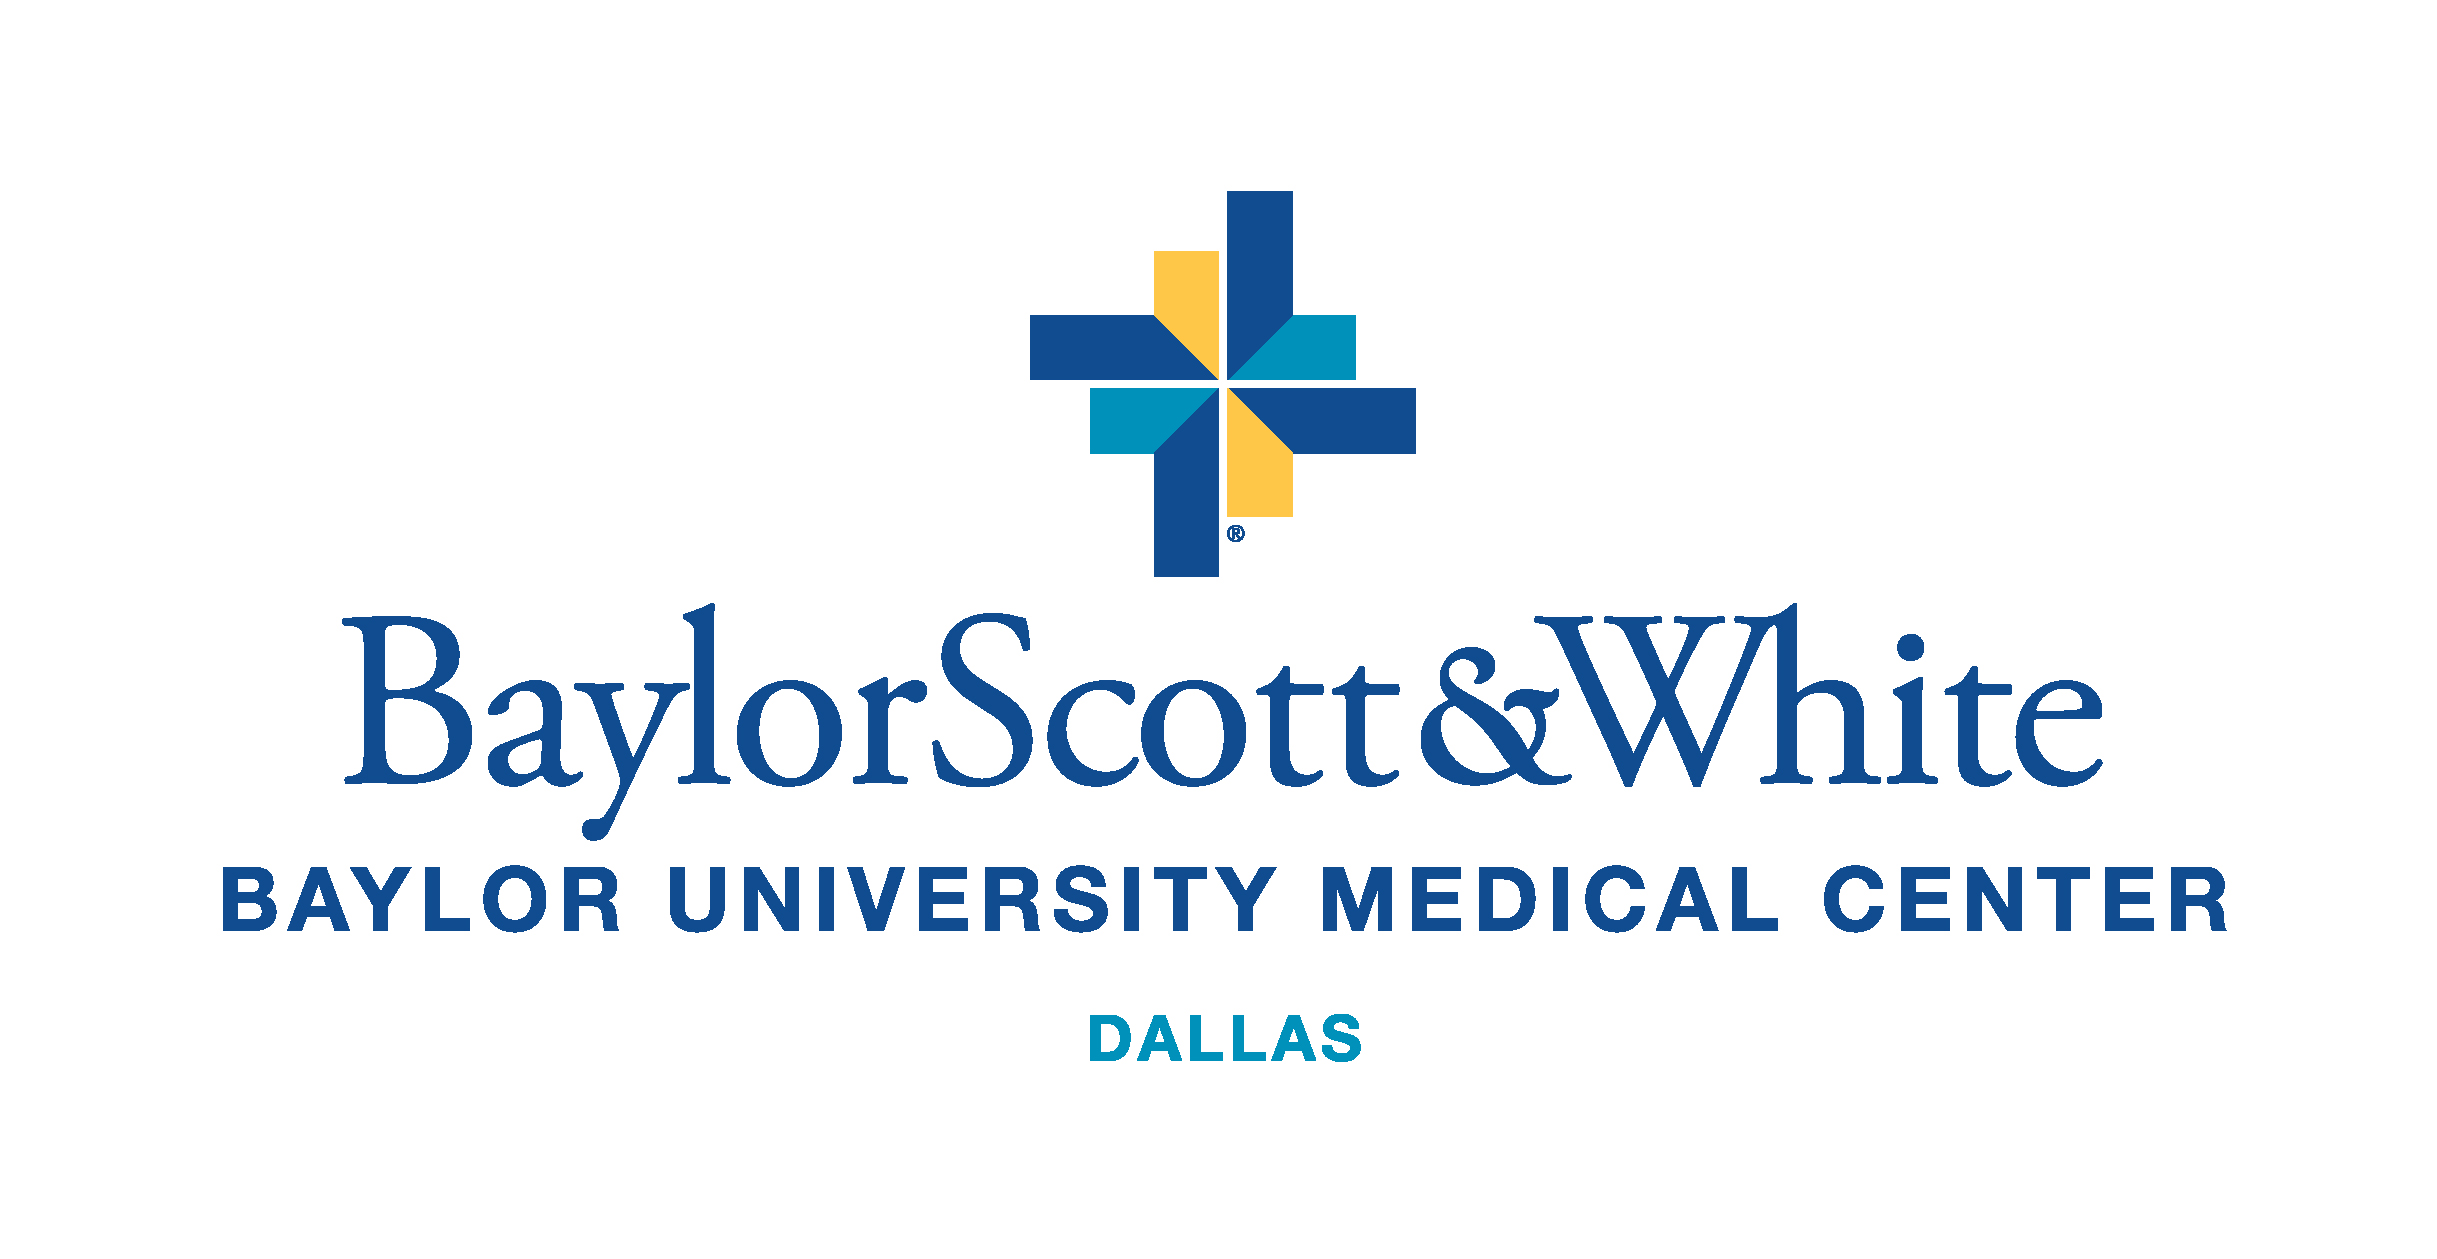 BSW Baylor University Medical Center Dallas_C_4C White Background.jpg